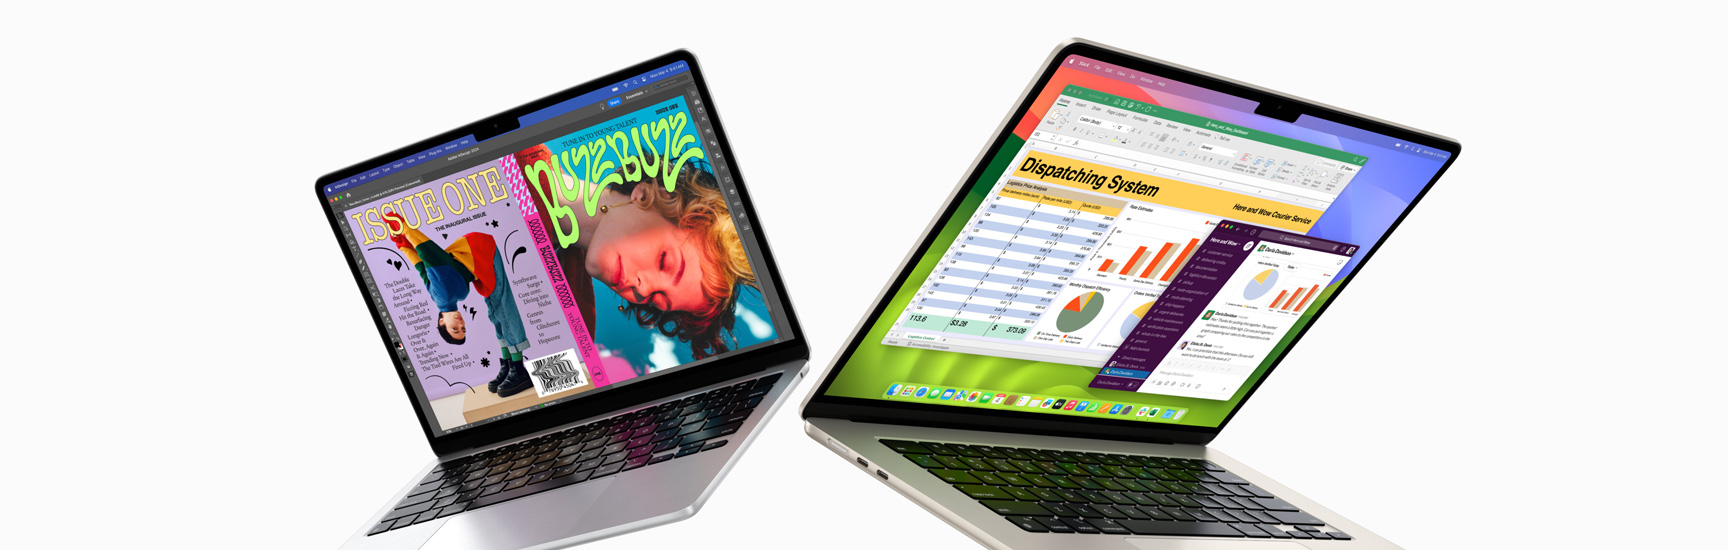 MacBook Air รุ่น 13 นิ้ว ที่เปิดแง้มอยู่ทางด้านซ้ายและ MacBook Air รุ่น 15 นิ้ว อยู่ทางด้านขวา หน้าจอของรุ่น 13 นิ้ว แสดงปกนิตยสารสีสันสวยงามที่สร้างด้วย InDesign หน้าจอของรุ่น 15 นิ้ว แสดง Microsoft Excel และ Slack